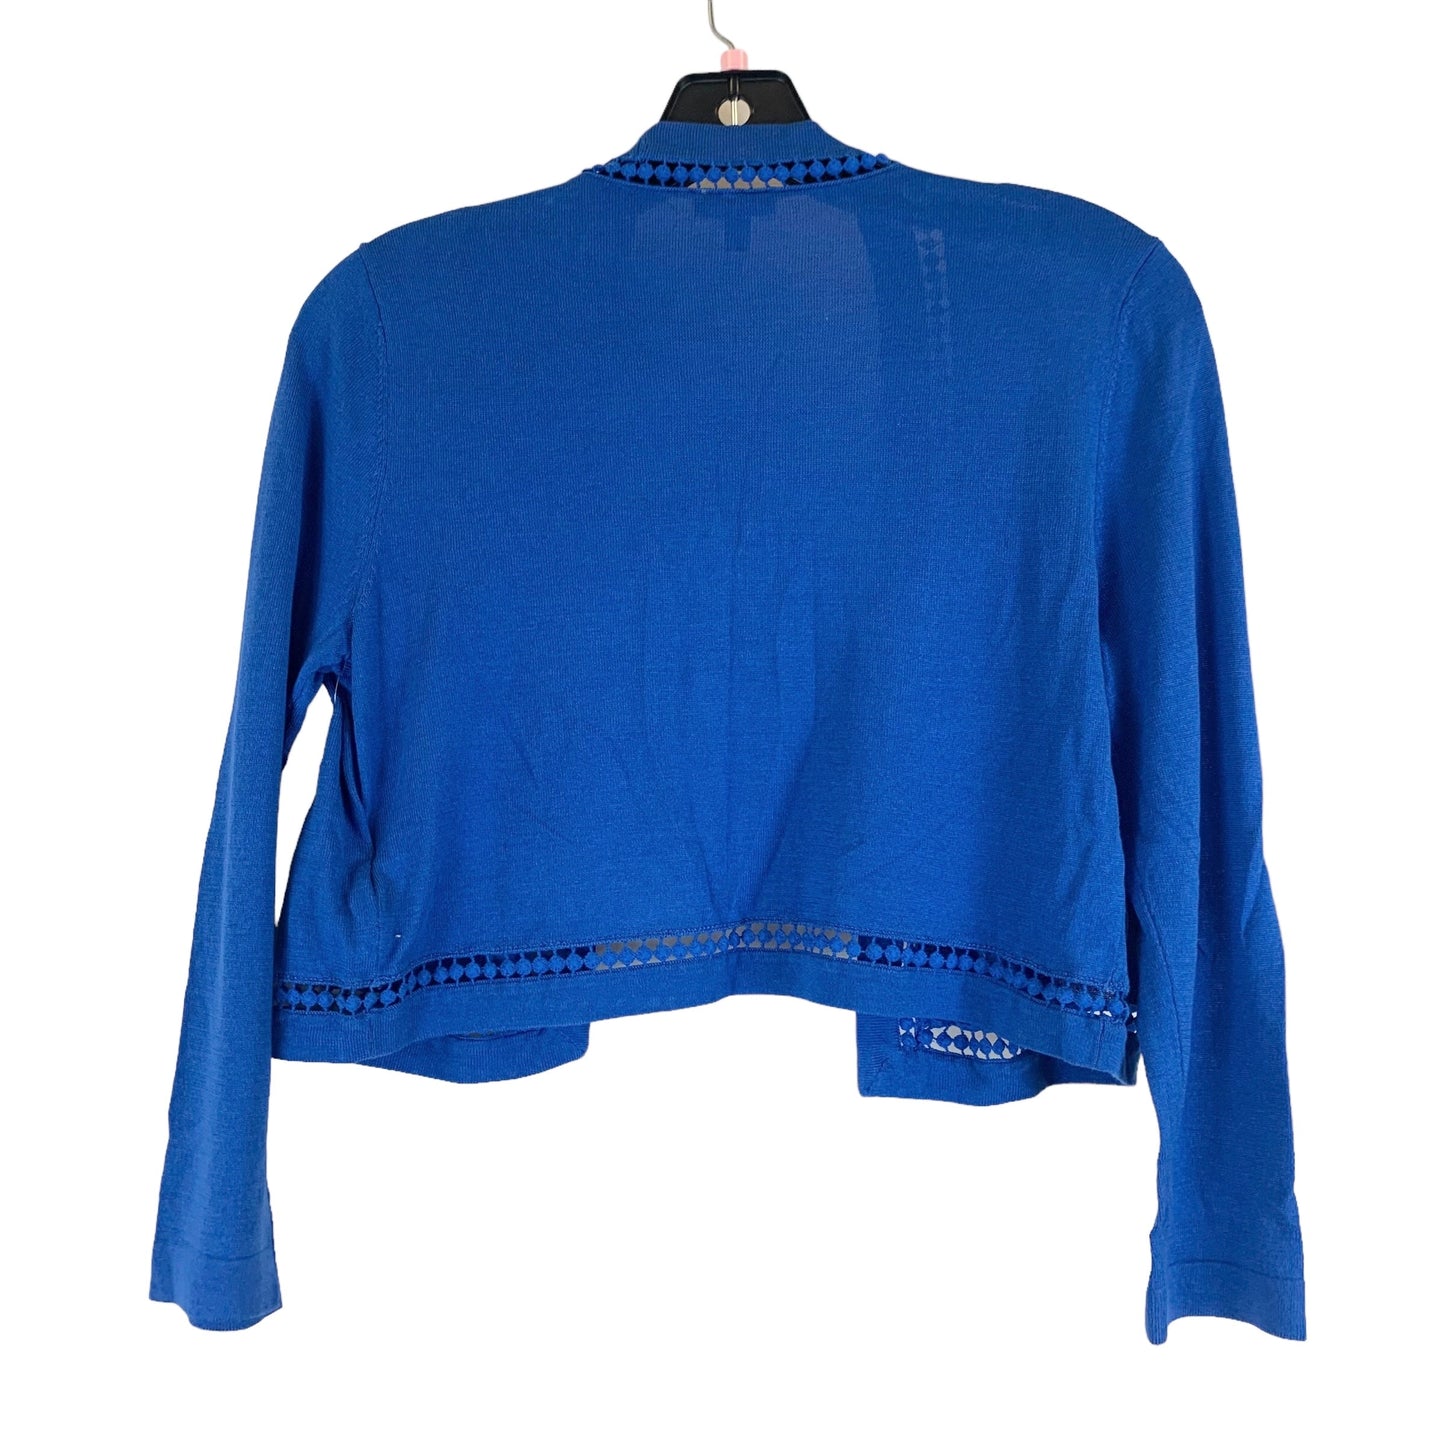 Blue Top 3/4 Sleeve Basic Talbots, Size Xs